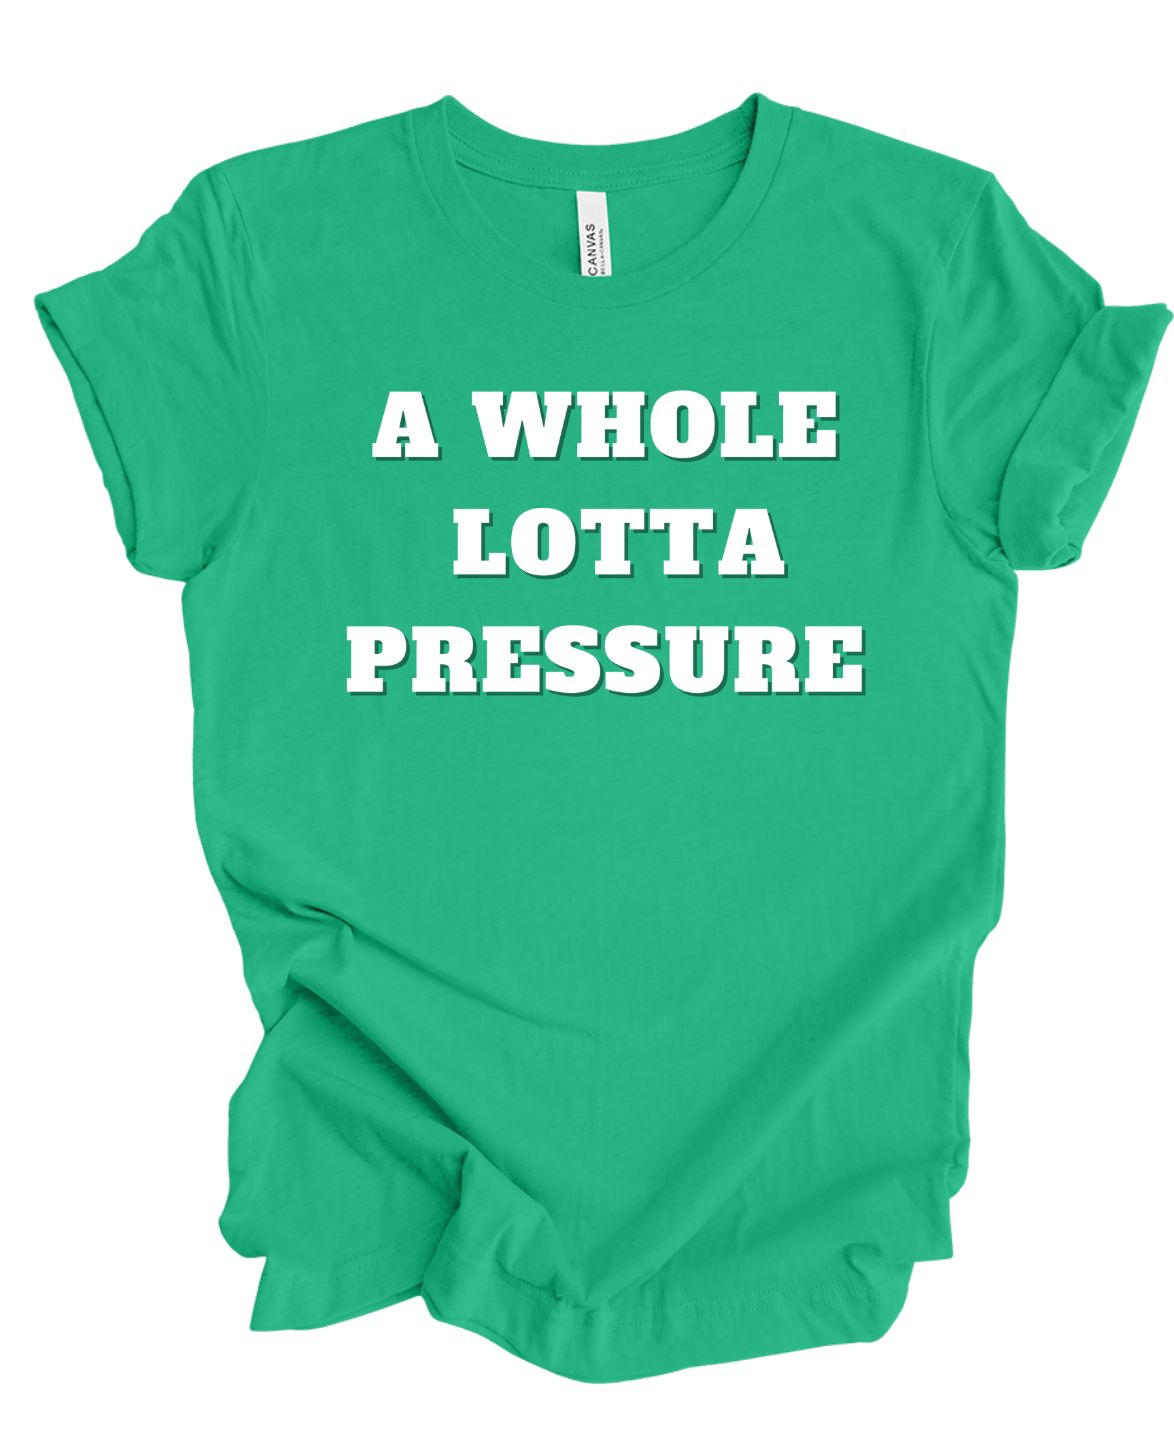 A Whole lotta Pressure T-shirt